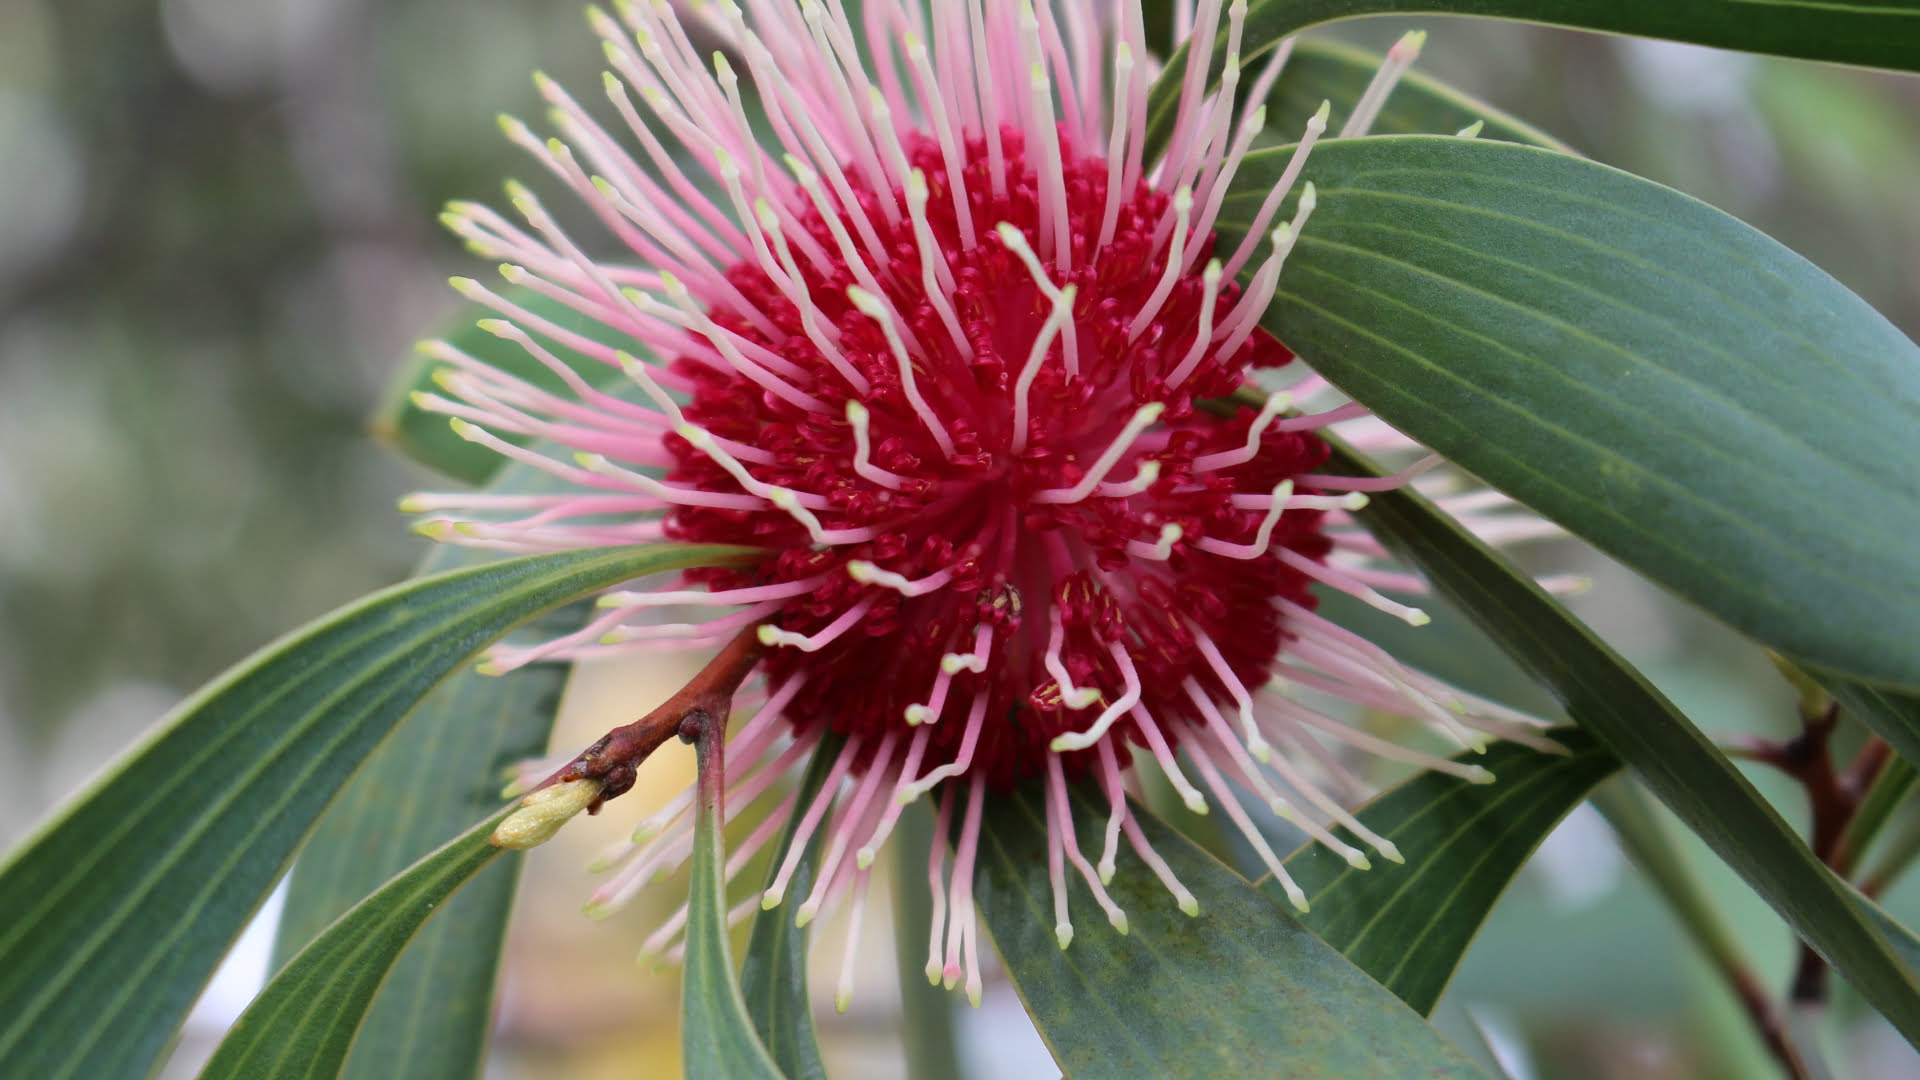 Australian native plants